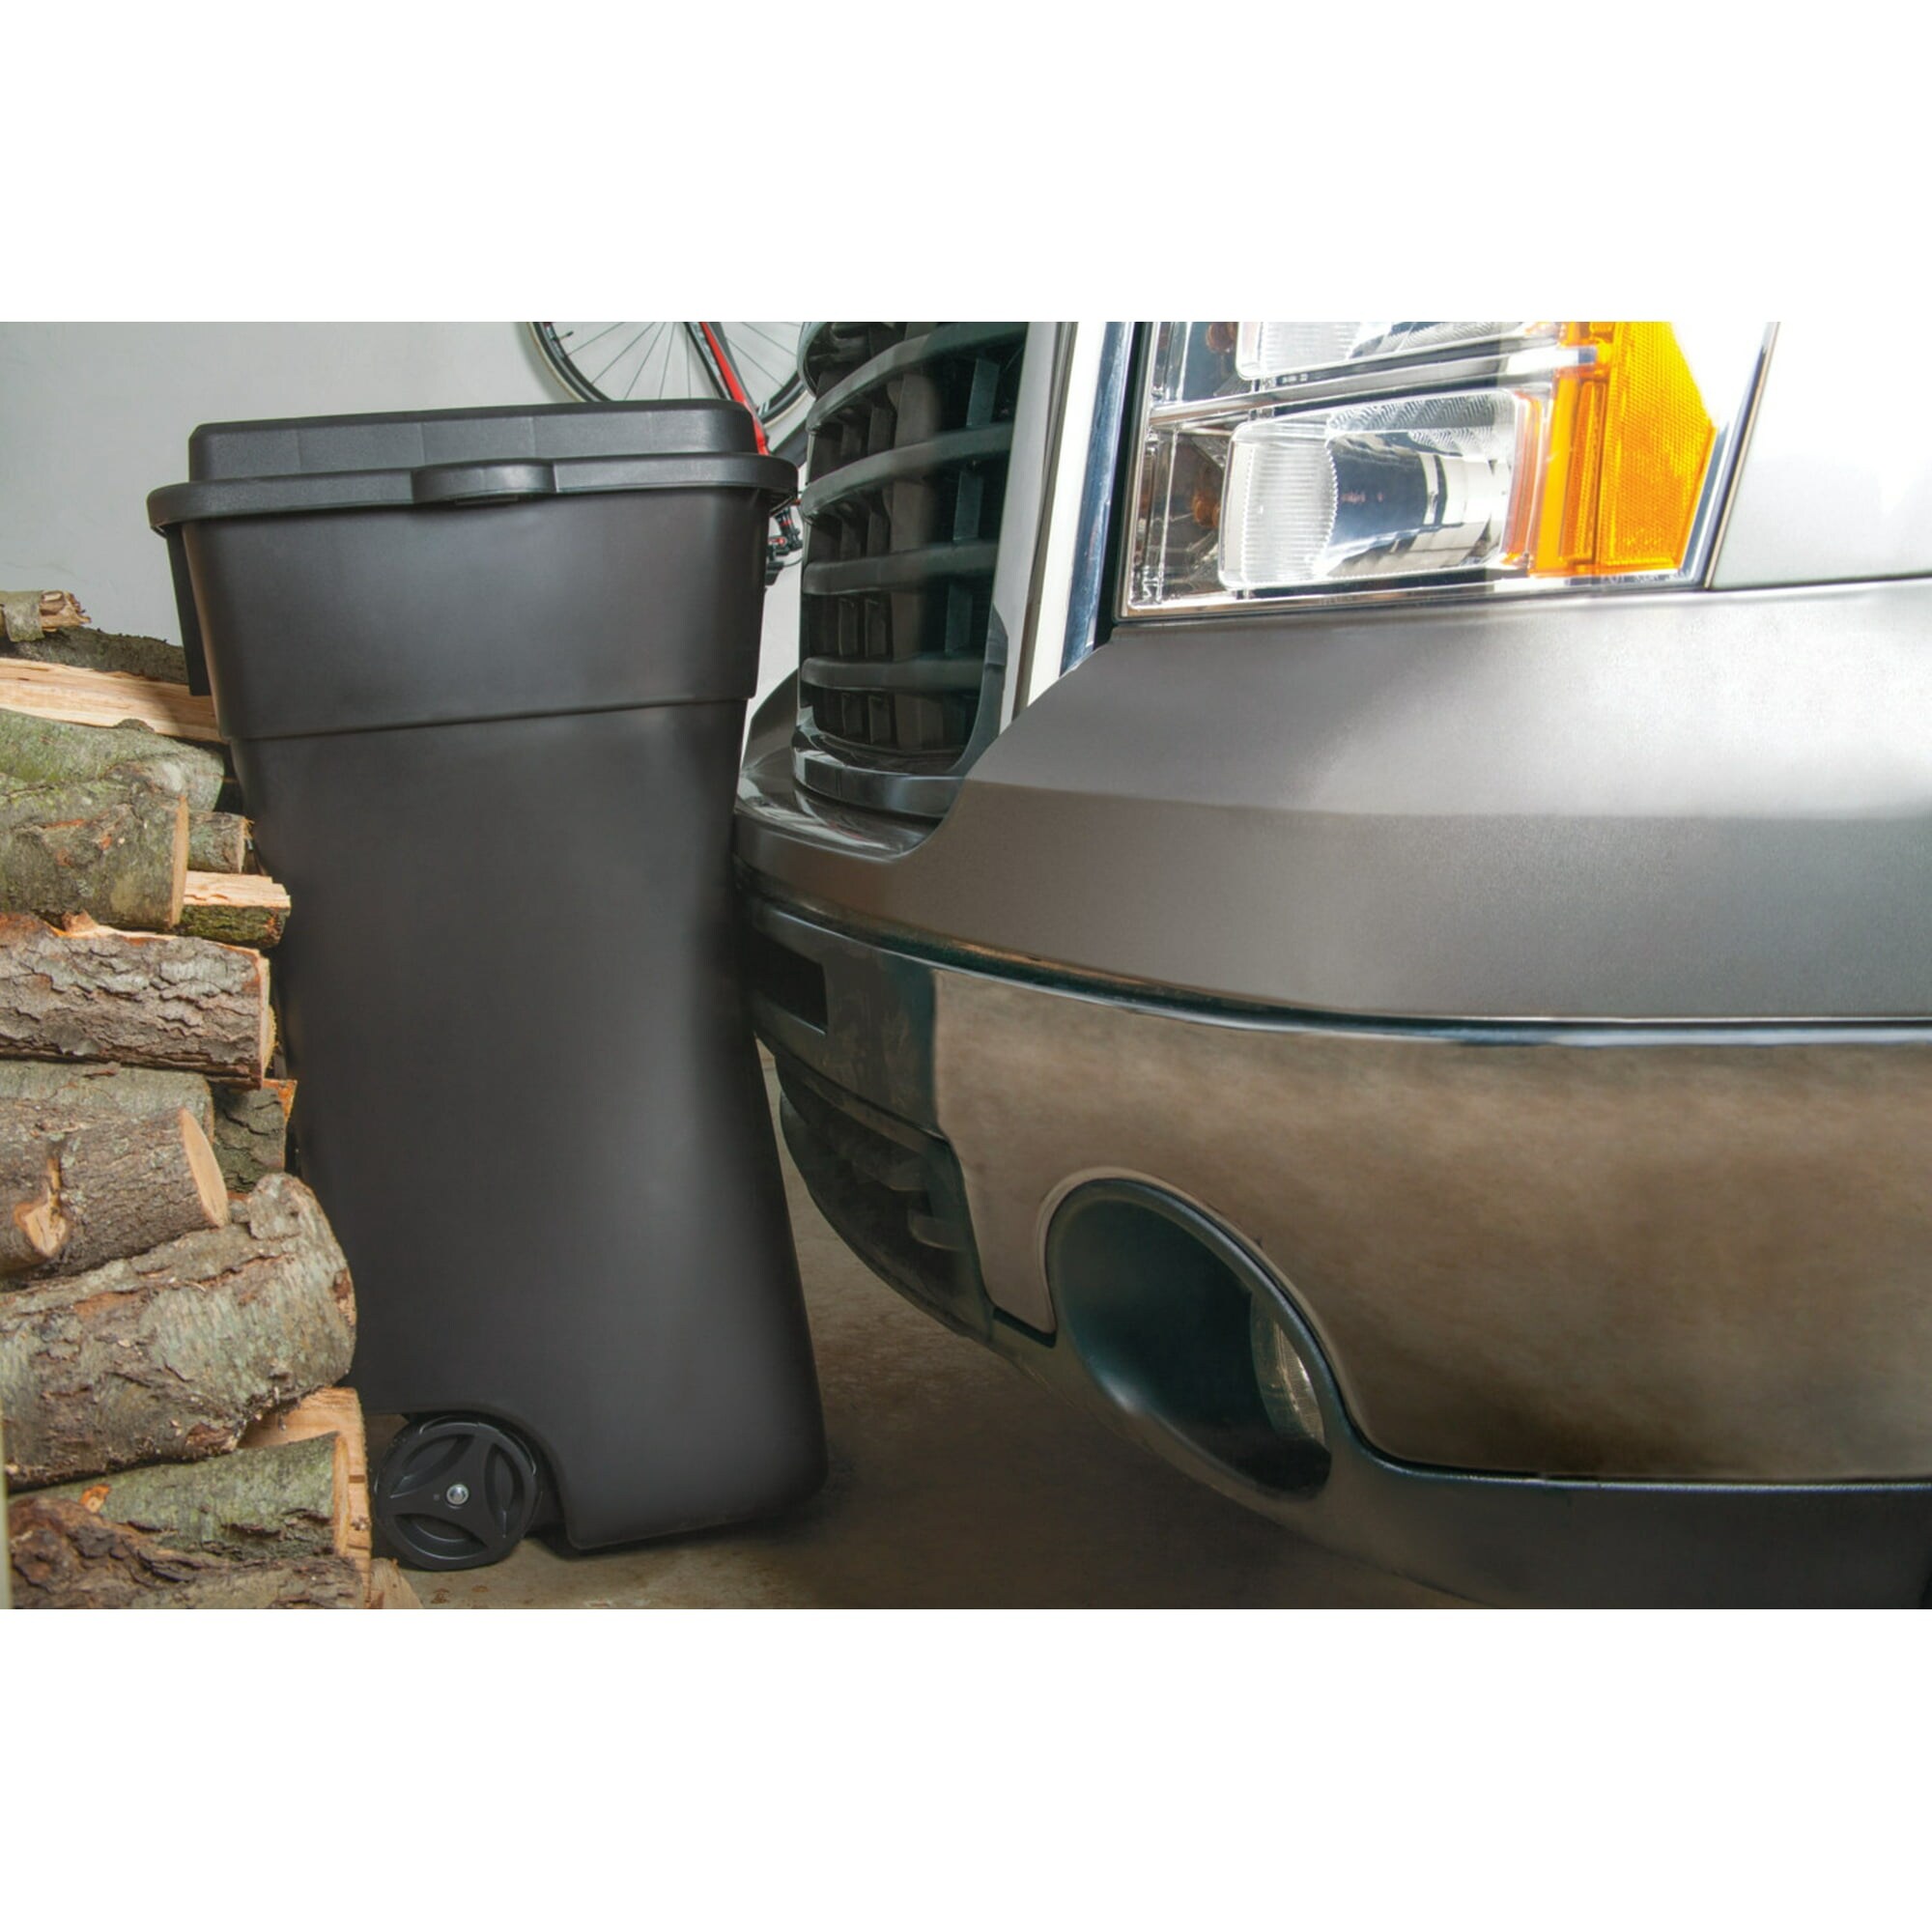 https://ak1.ostkcdn.com/images/products/is/images/direct/80ef0787139ae6c15f799b6d12346a949c14b582/50-Gal-Roughneck-Wheeled-Plastic-Garage-Trash-Can%2C-Black.jpg